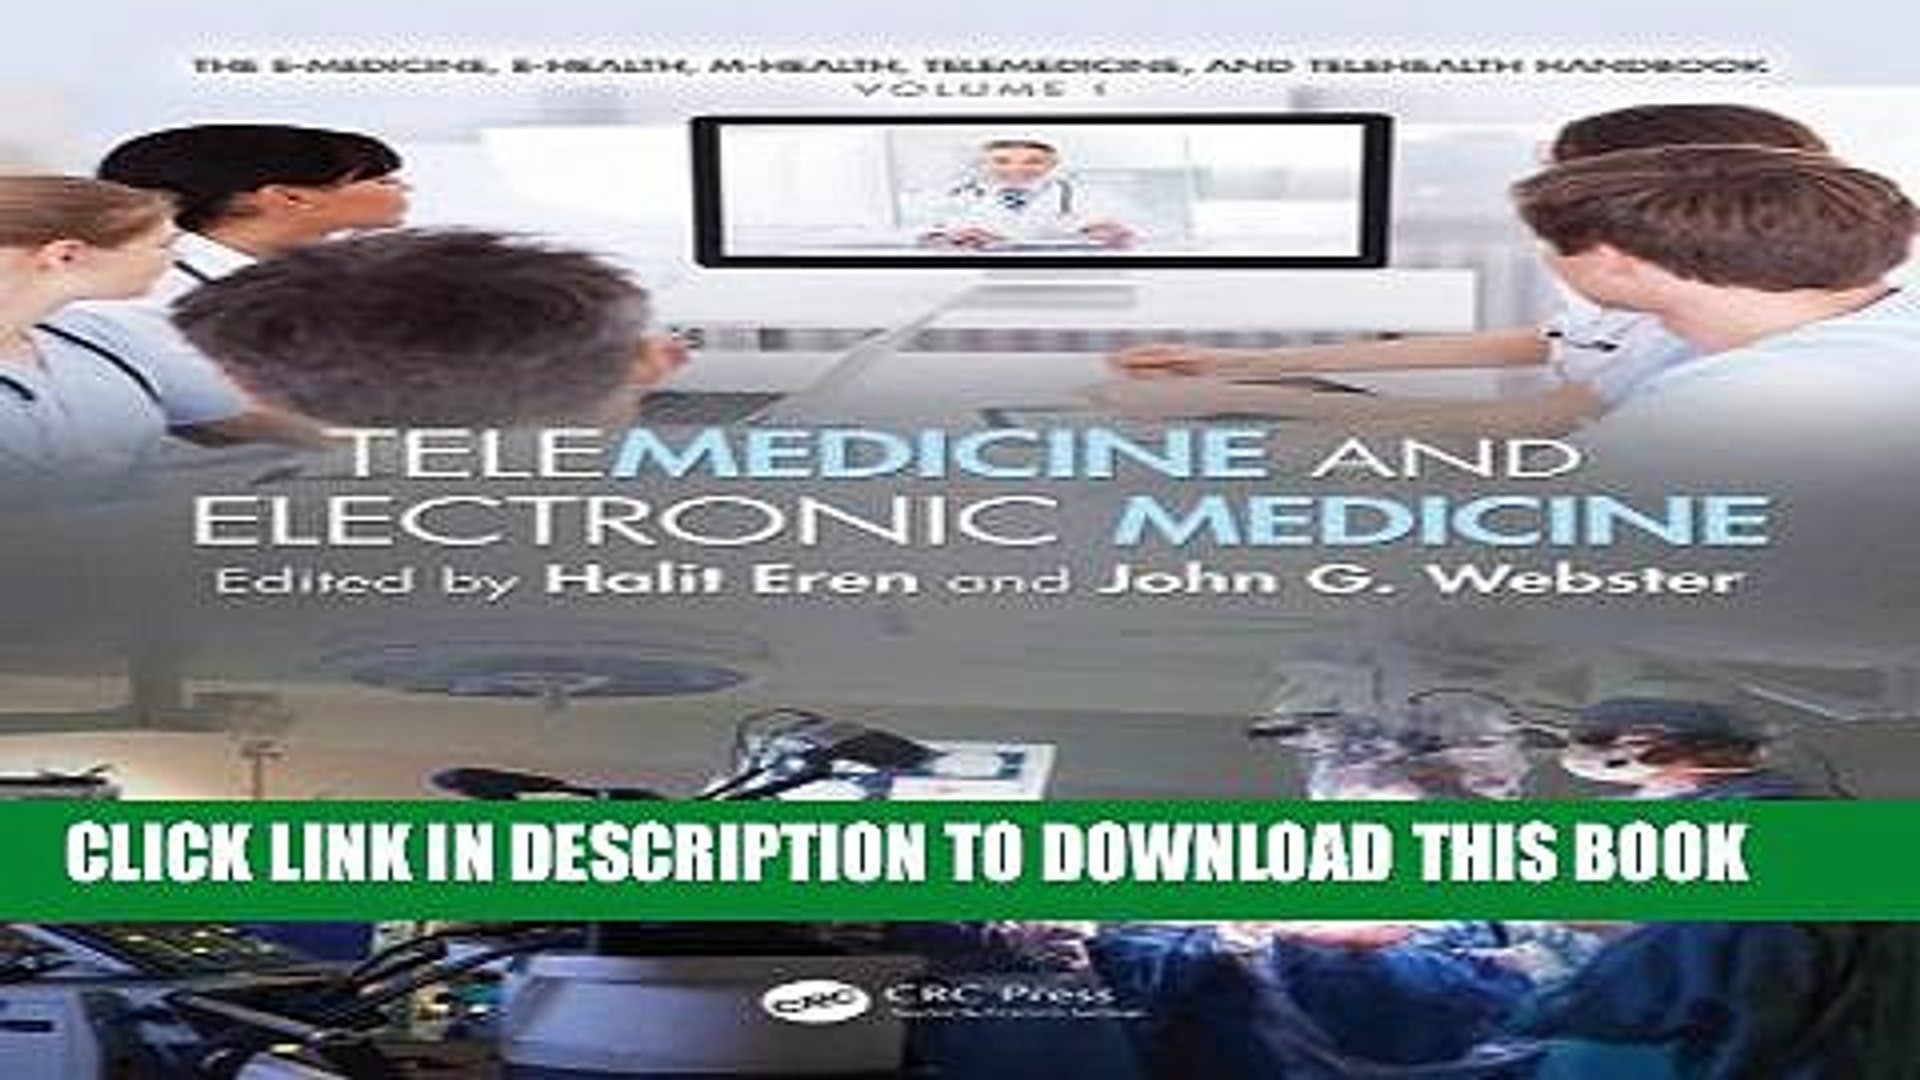 [PDF] Telemedicine and Electronic Medicine (E-Medicine, E-Health, M-Health, Telemedicine, and